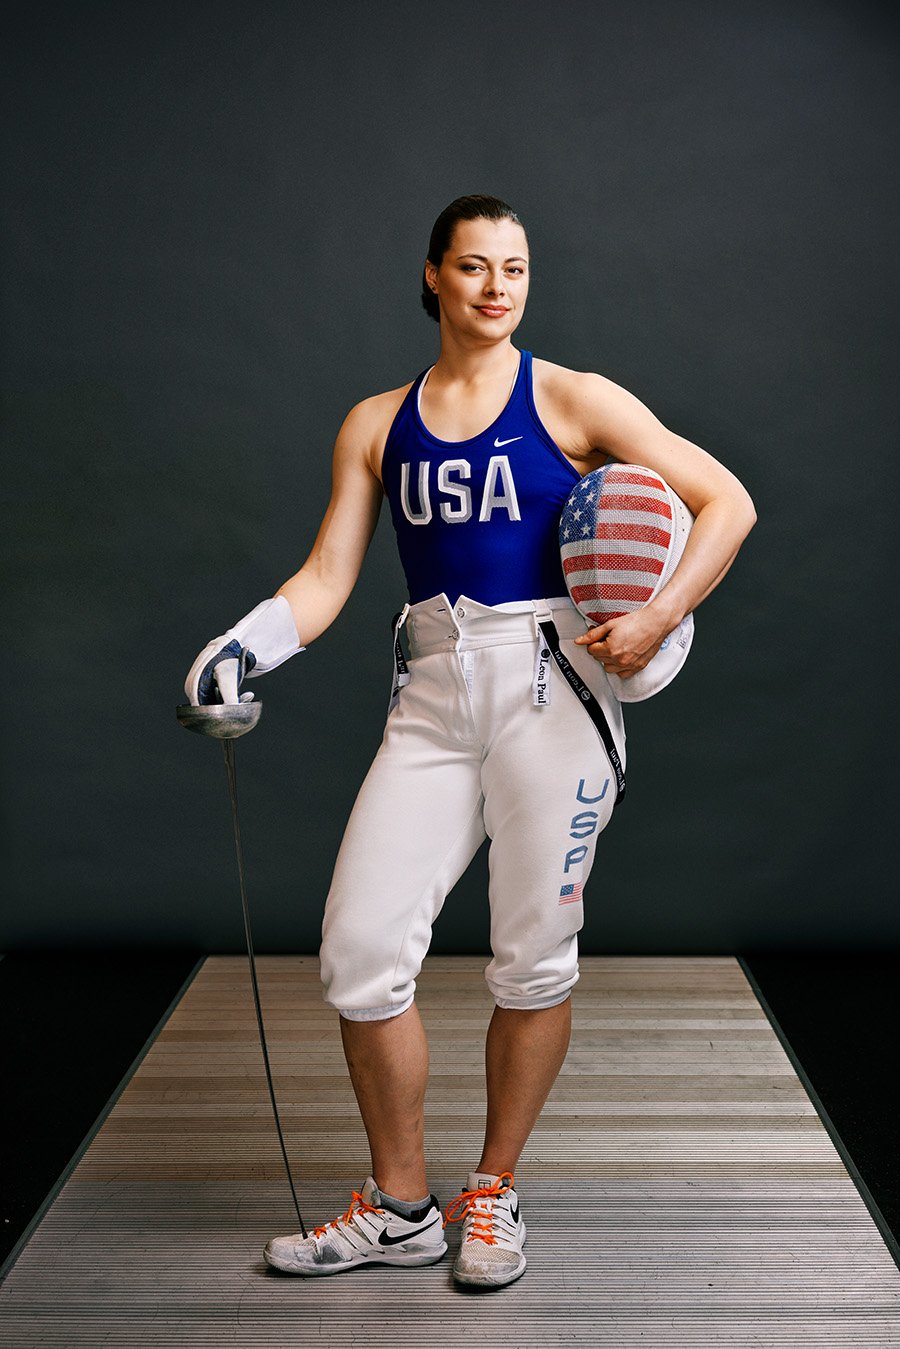 Jeff Wojtaszek's portrait of Kat Holmes in her fencing uniform for Real Woman magazine